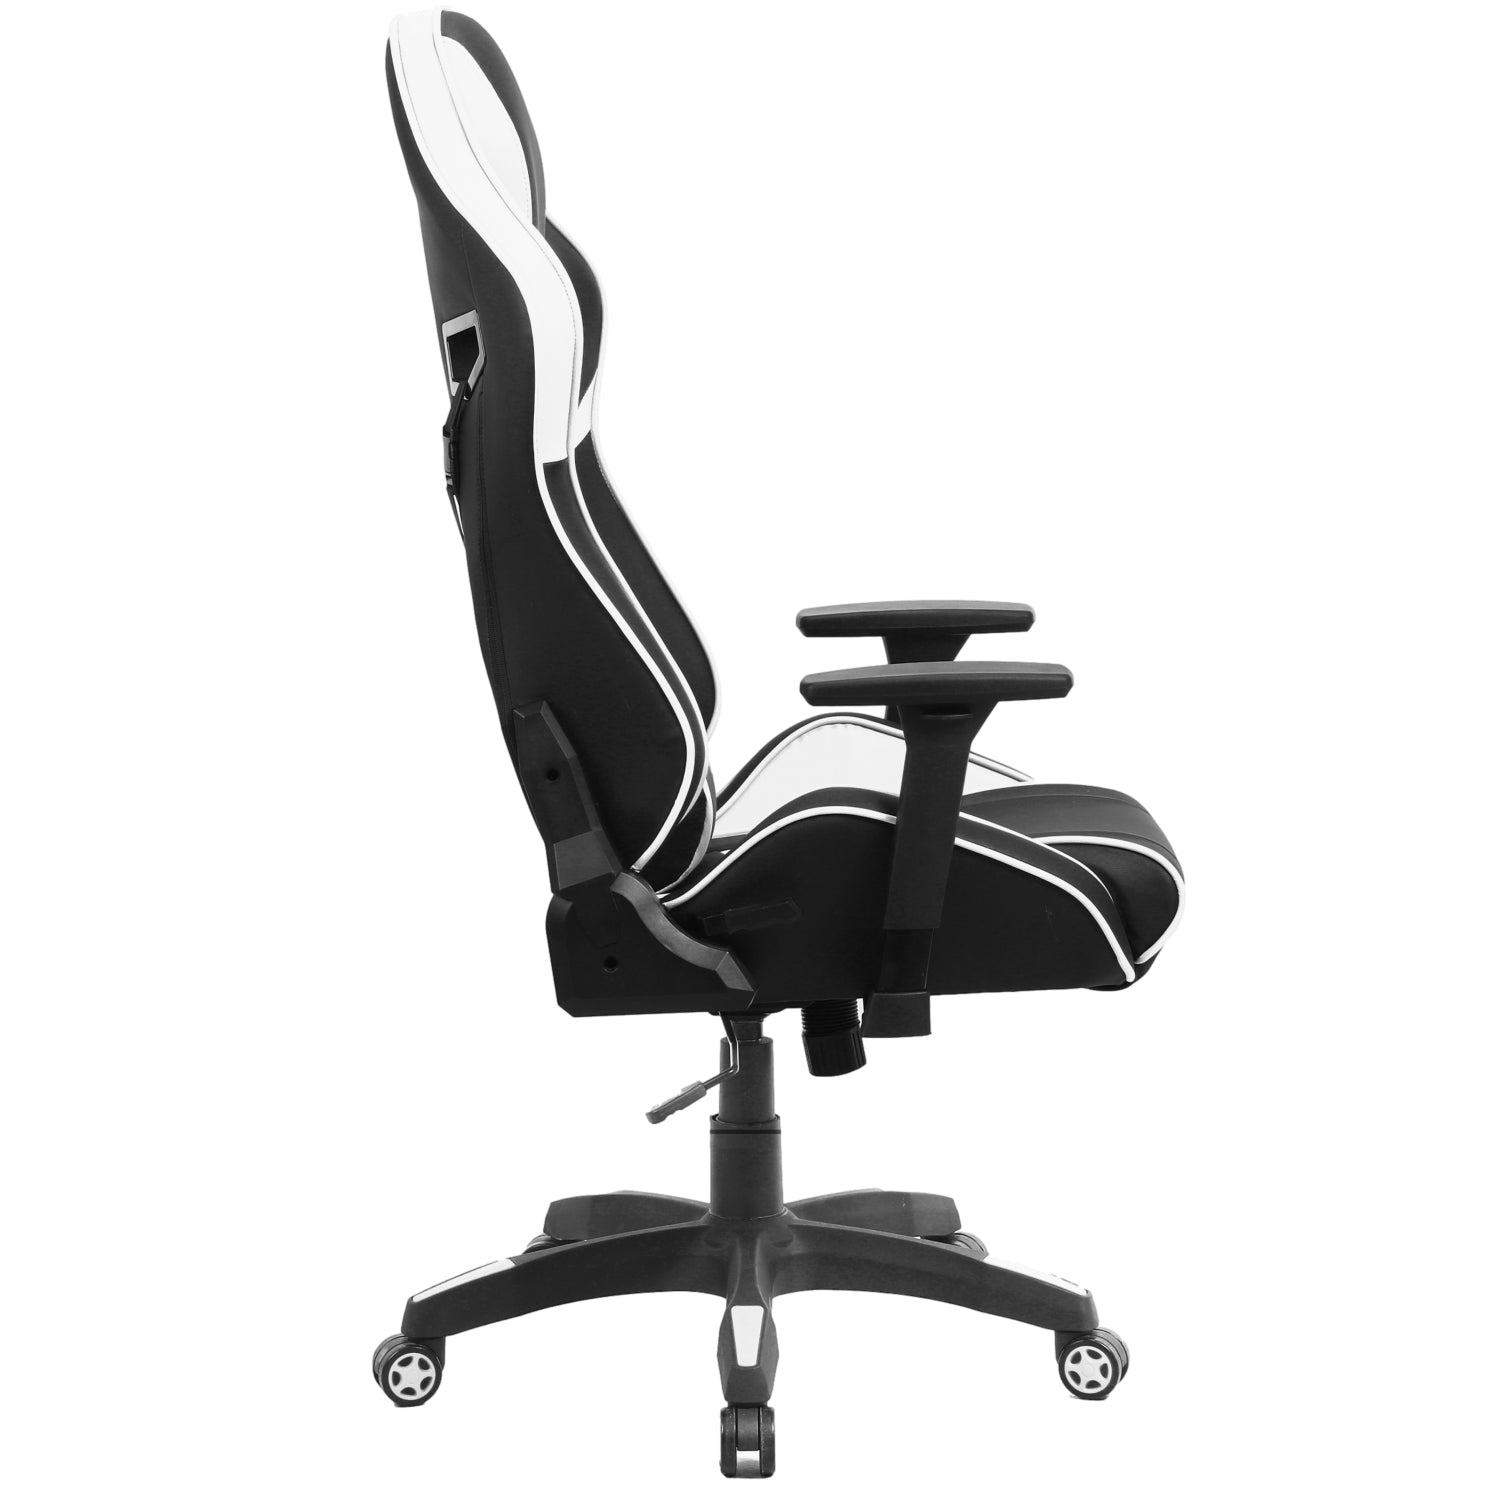 ViscoLogic SHROUD x Professional Grade Ergonomic High-Back Racing Sports Style Computer Gaming Chair